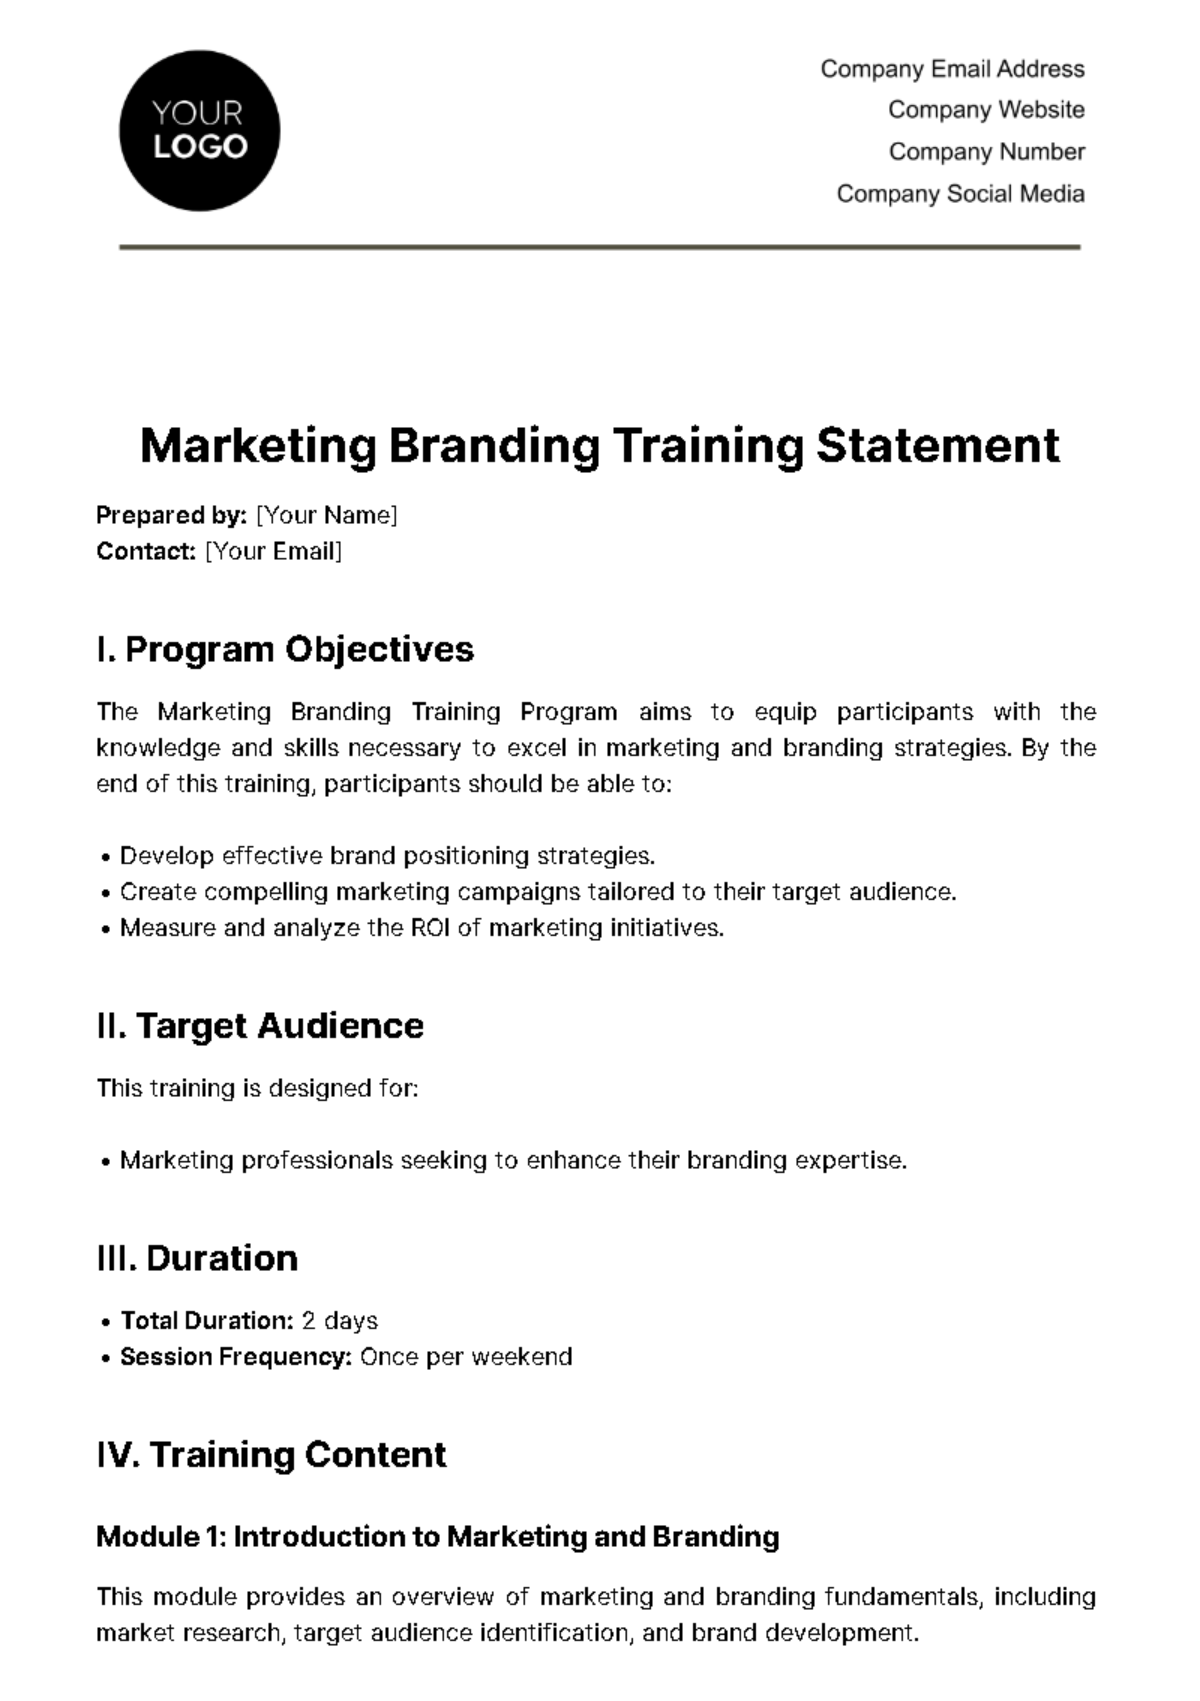 Free Marketing Branding Training Statement Template